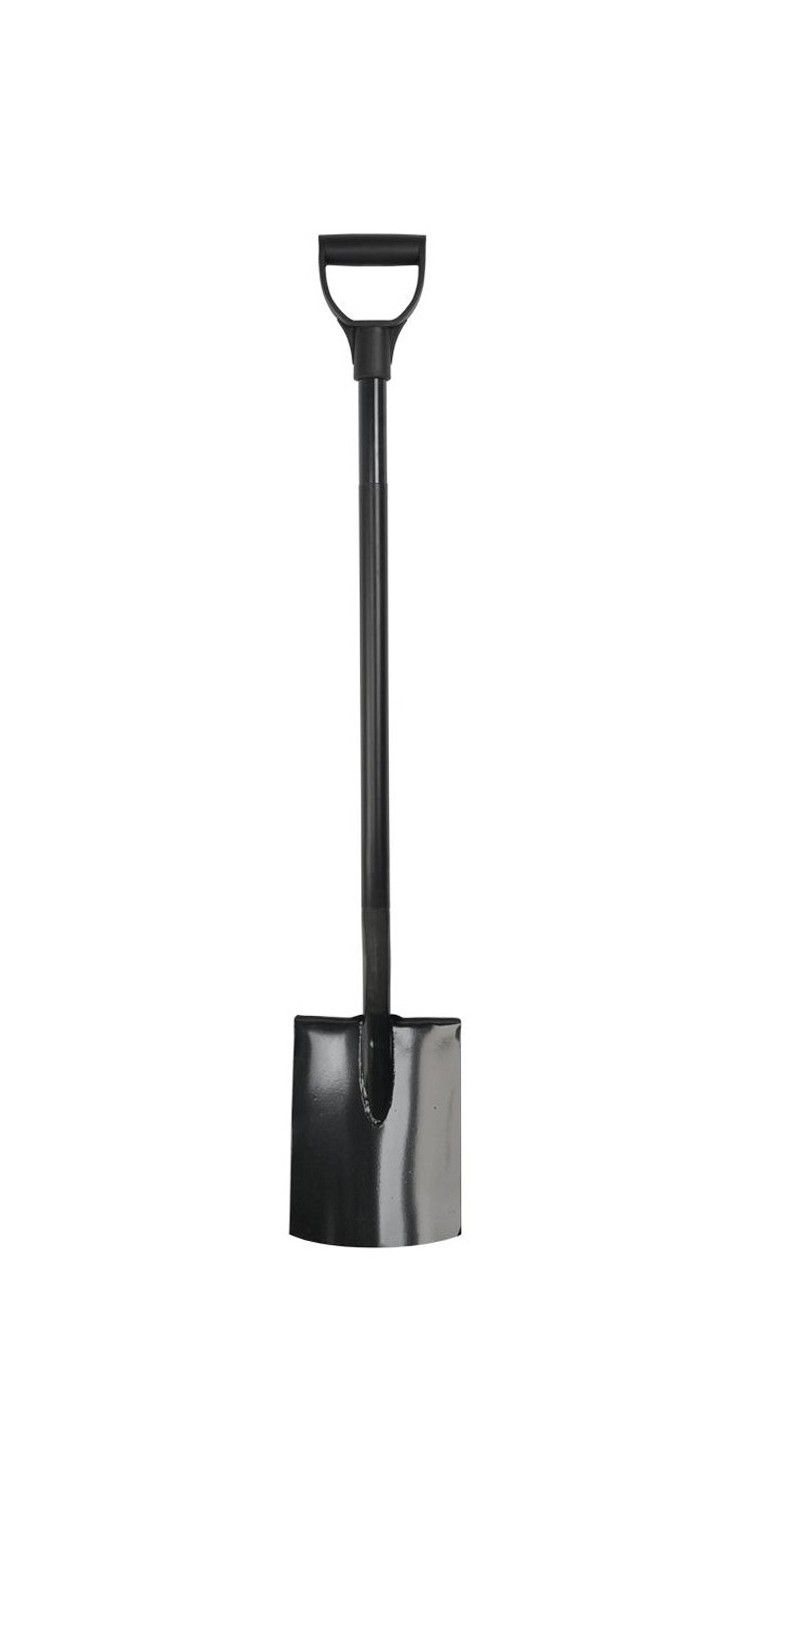 Лопата Neo Tools 95-006 в интернет-магазине, главное фото